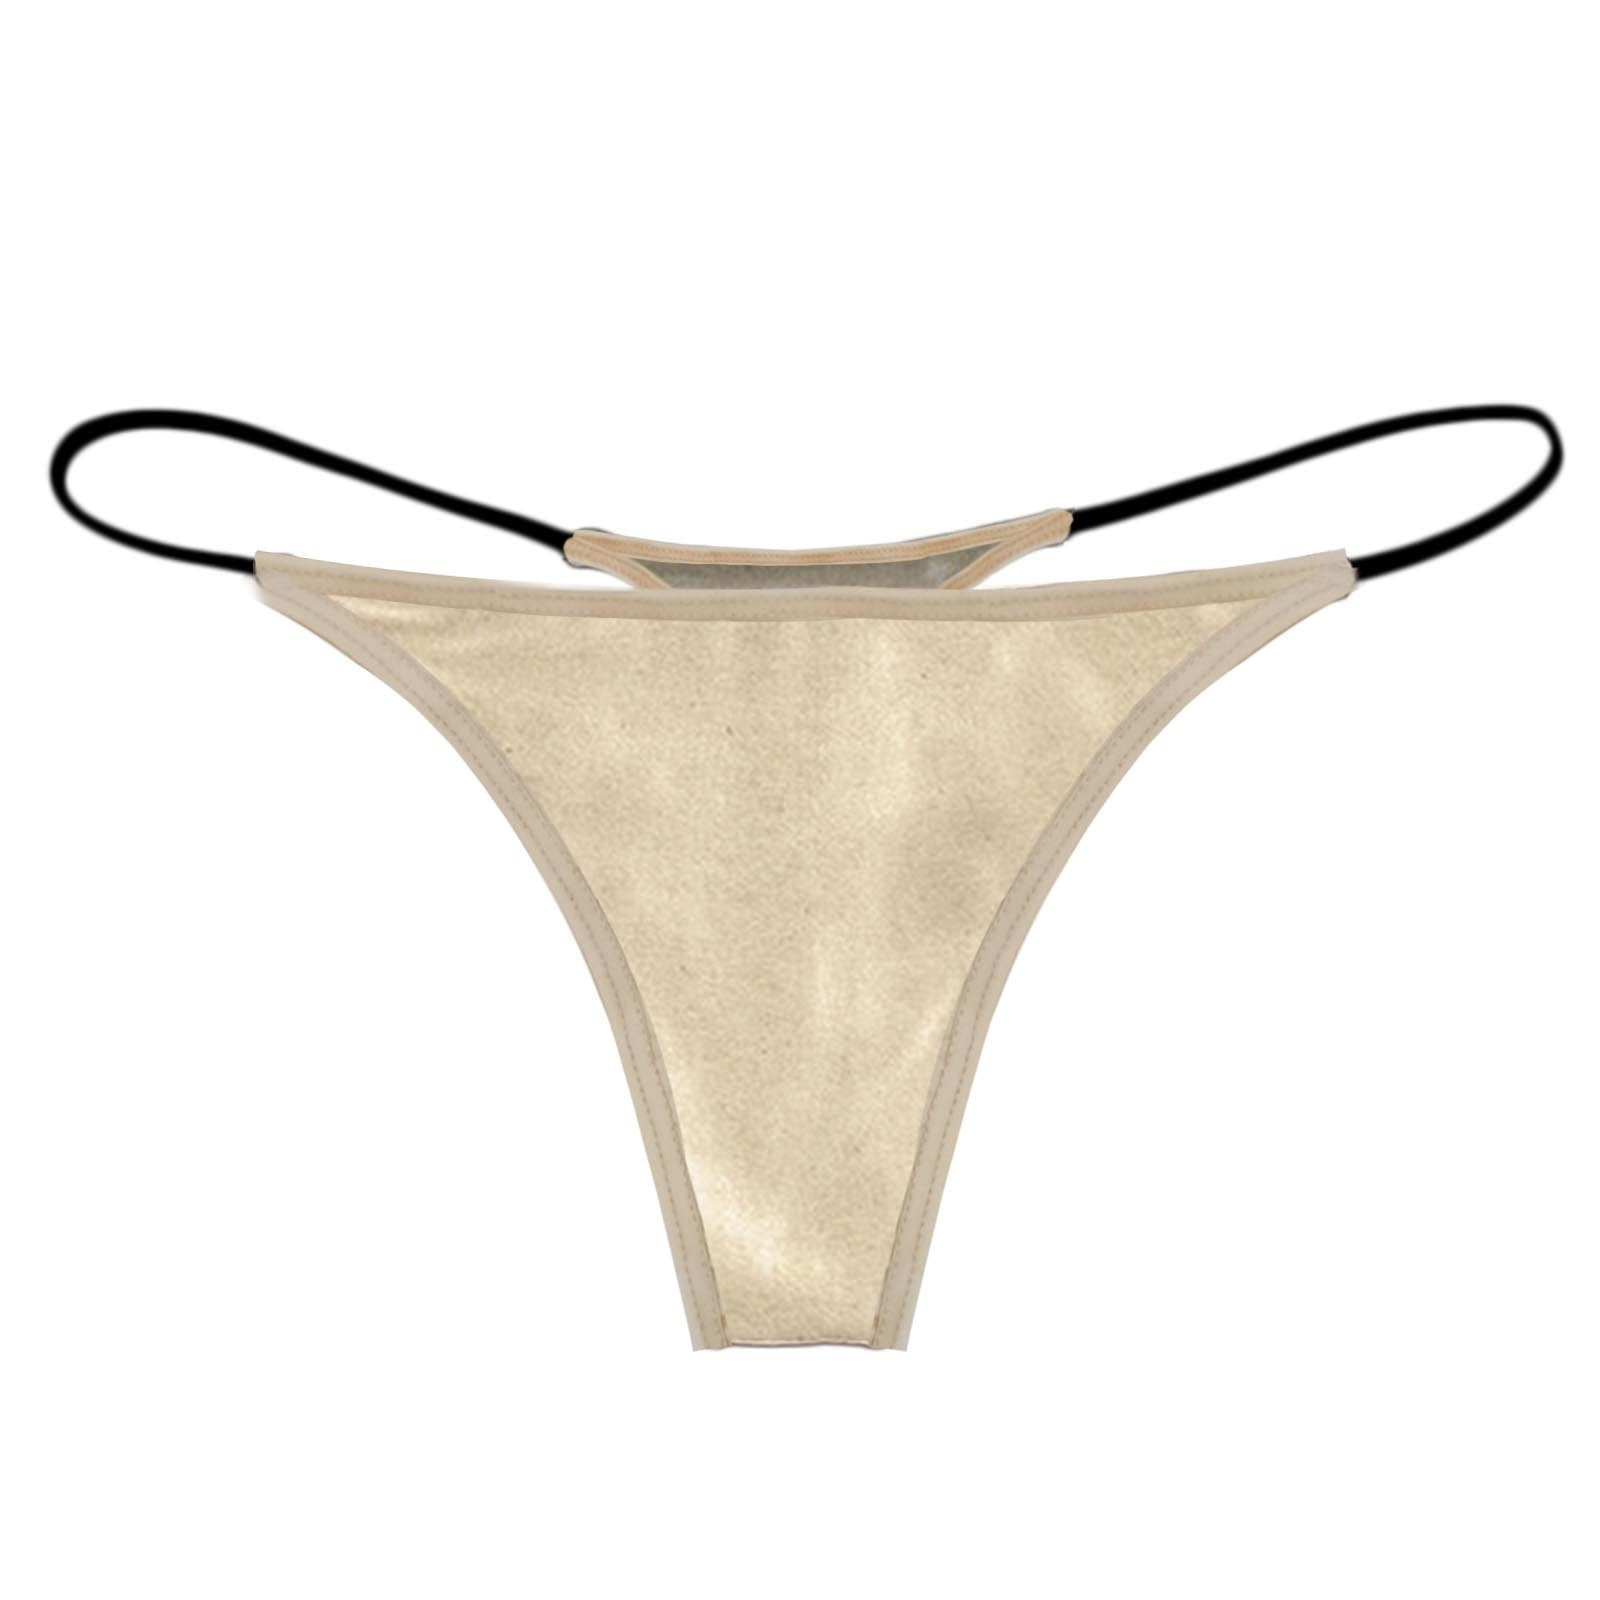 Women's Underwear Invisible Bikini No Show Nylon Spandex Ladies Panties